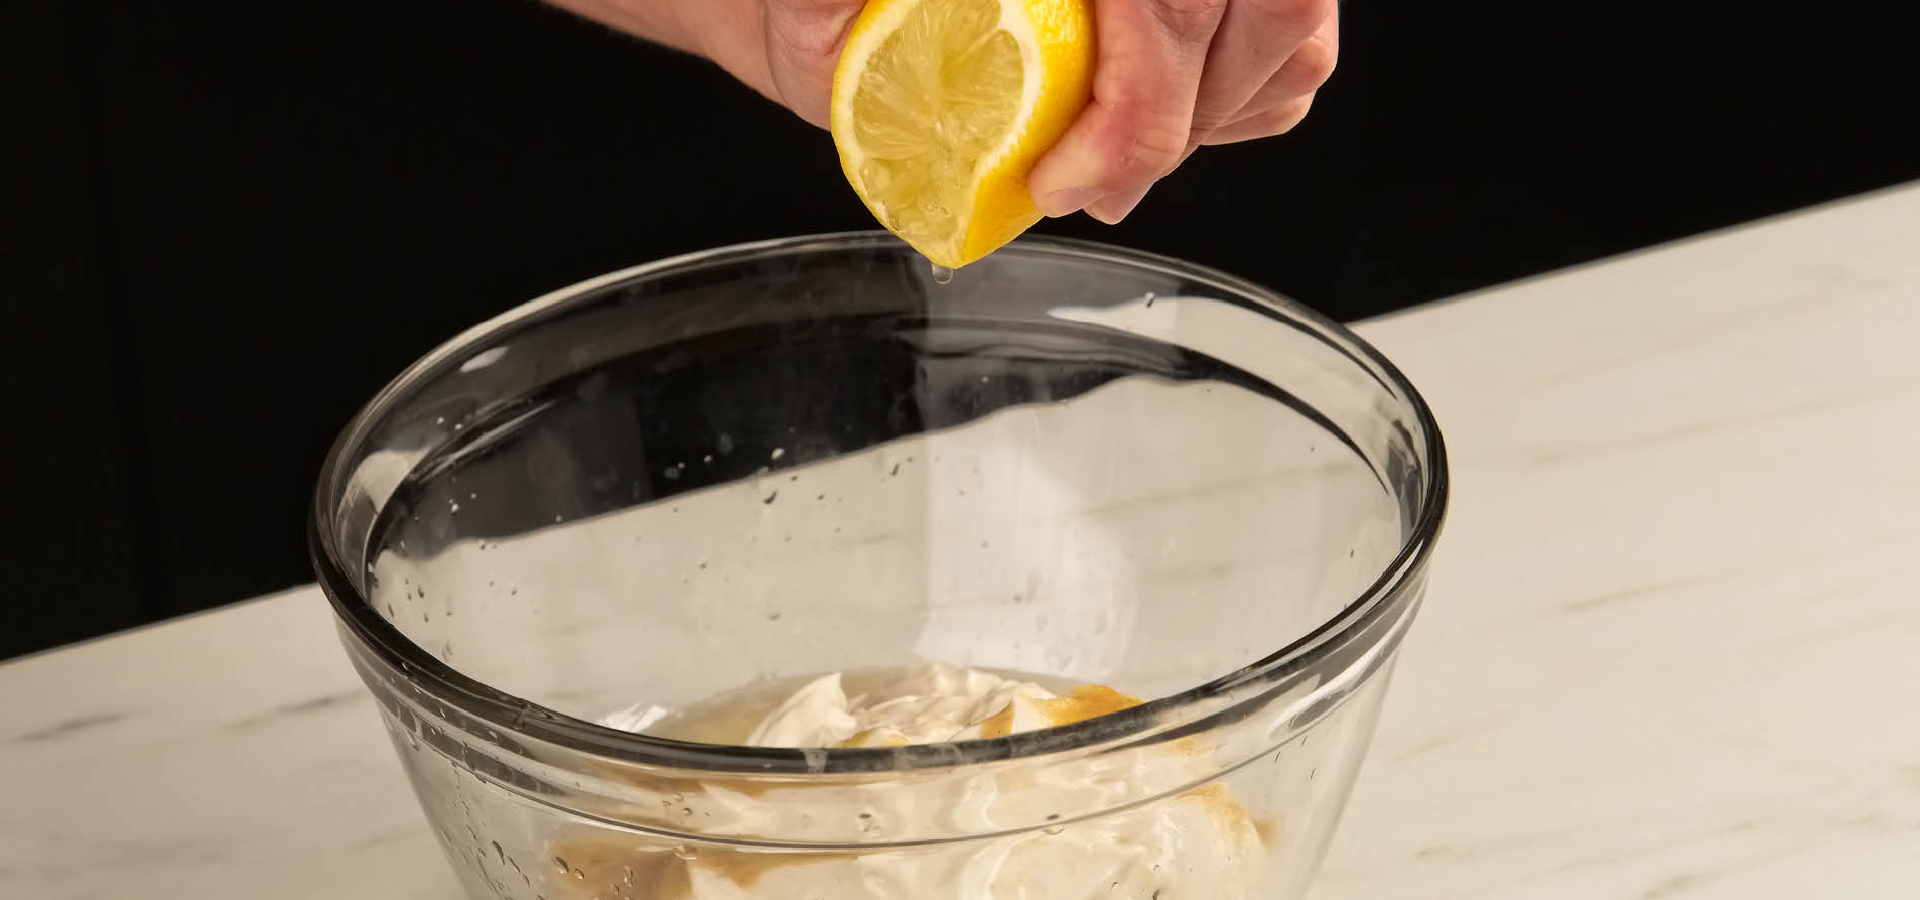 Squeezing a lemon into a bowl